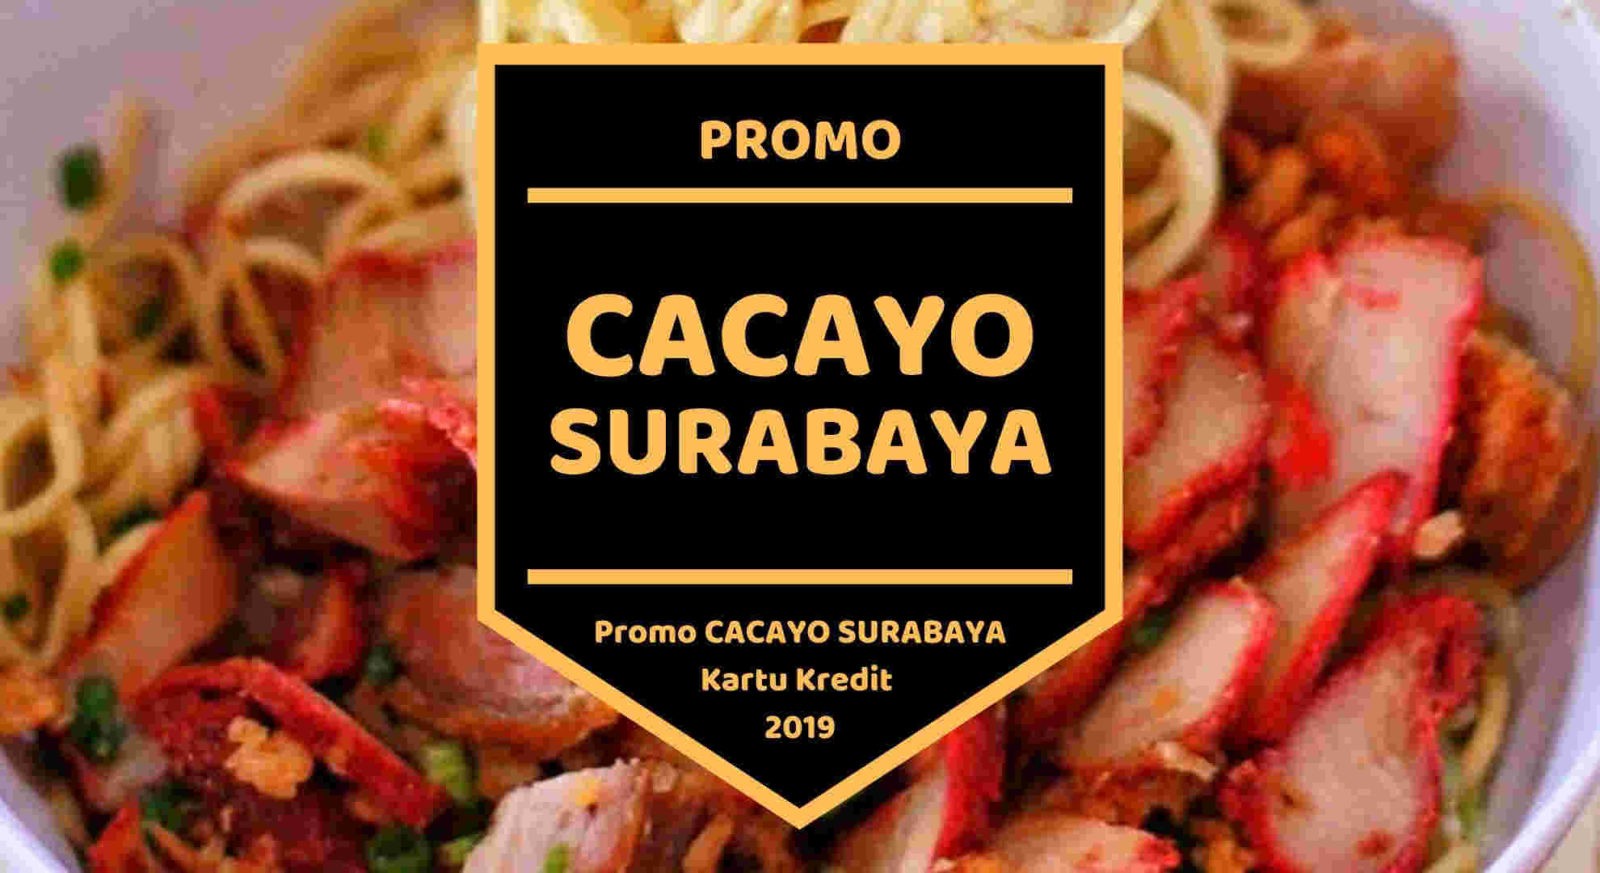 Promo Cacayo Surabaya